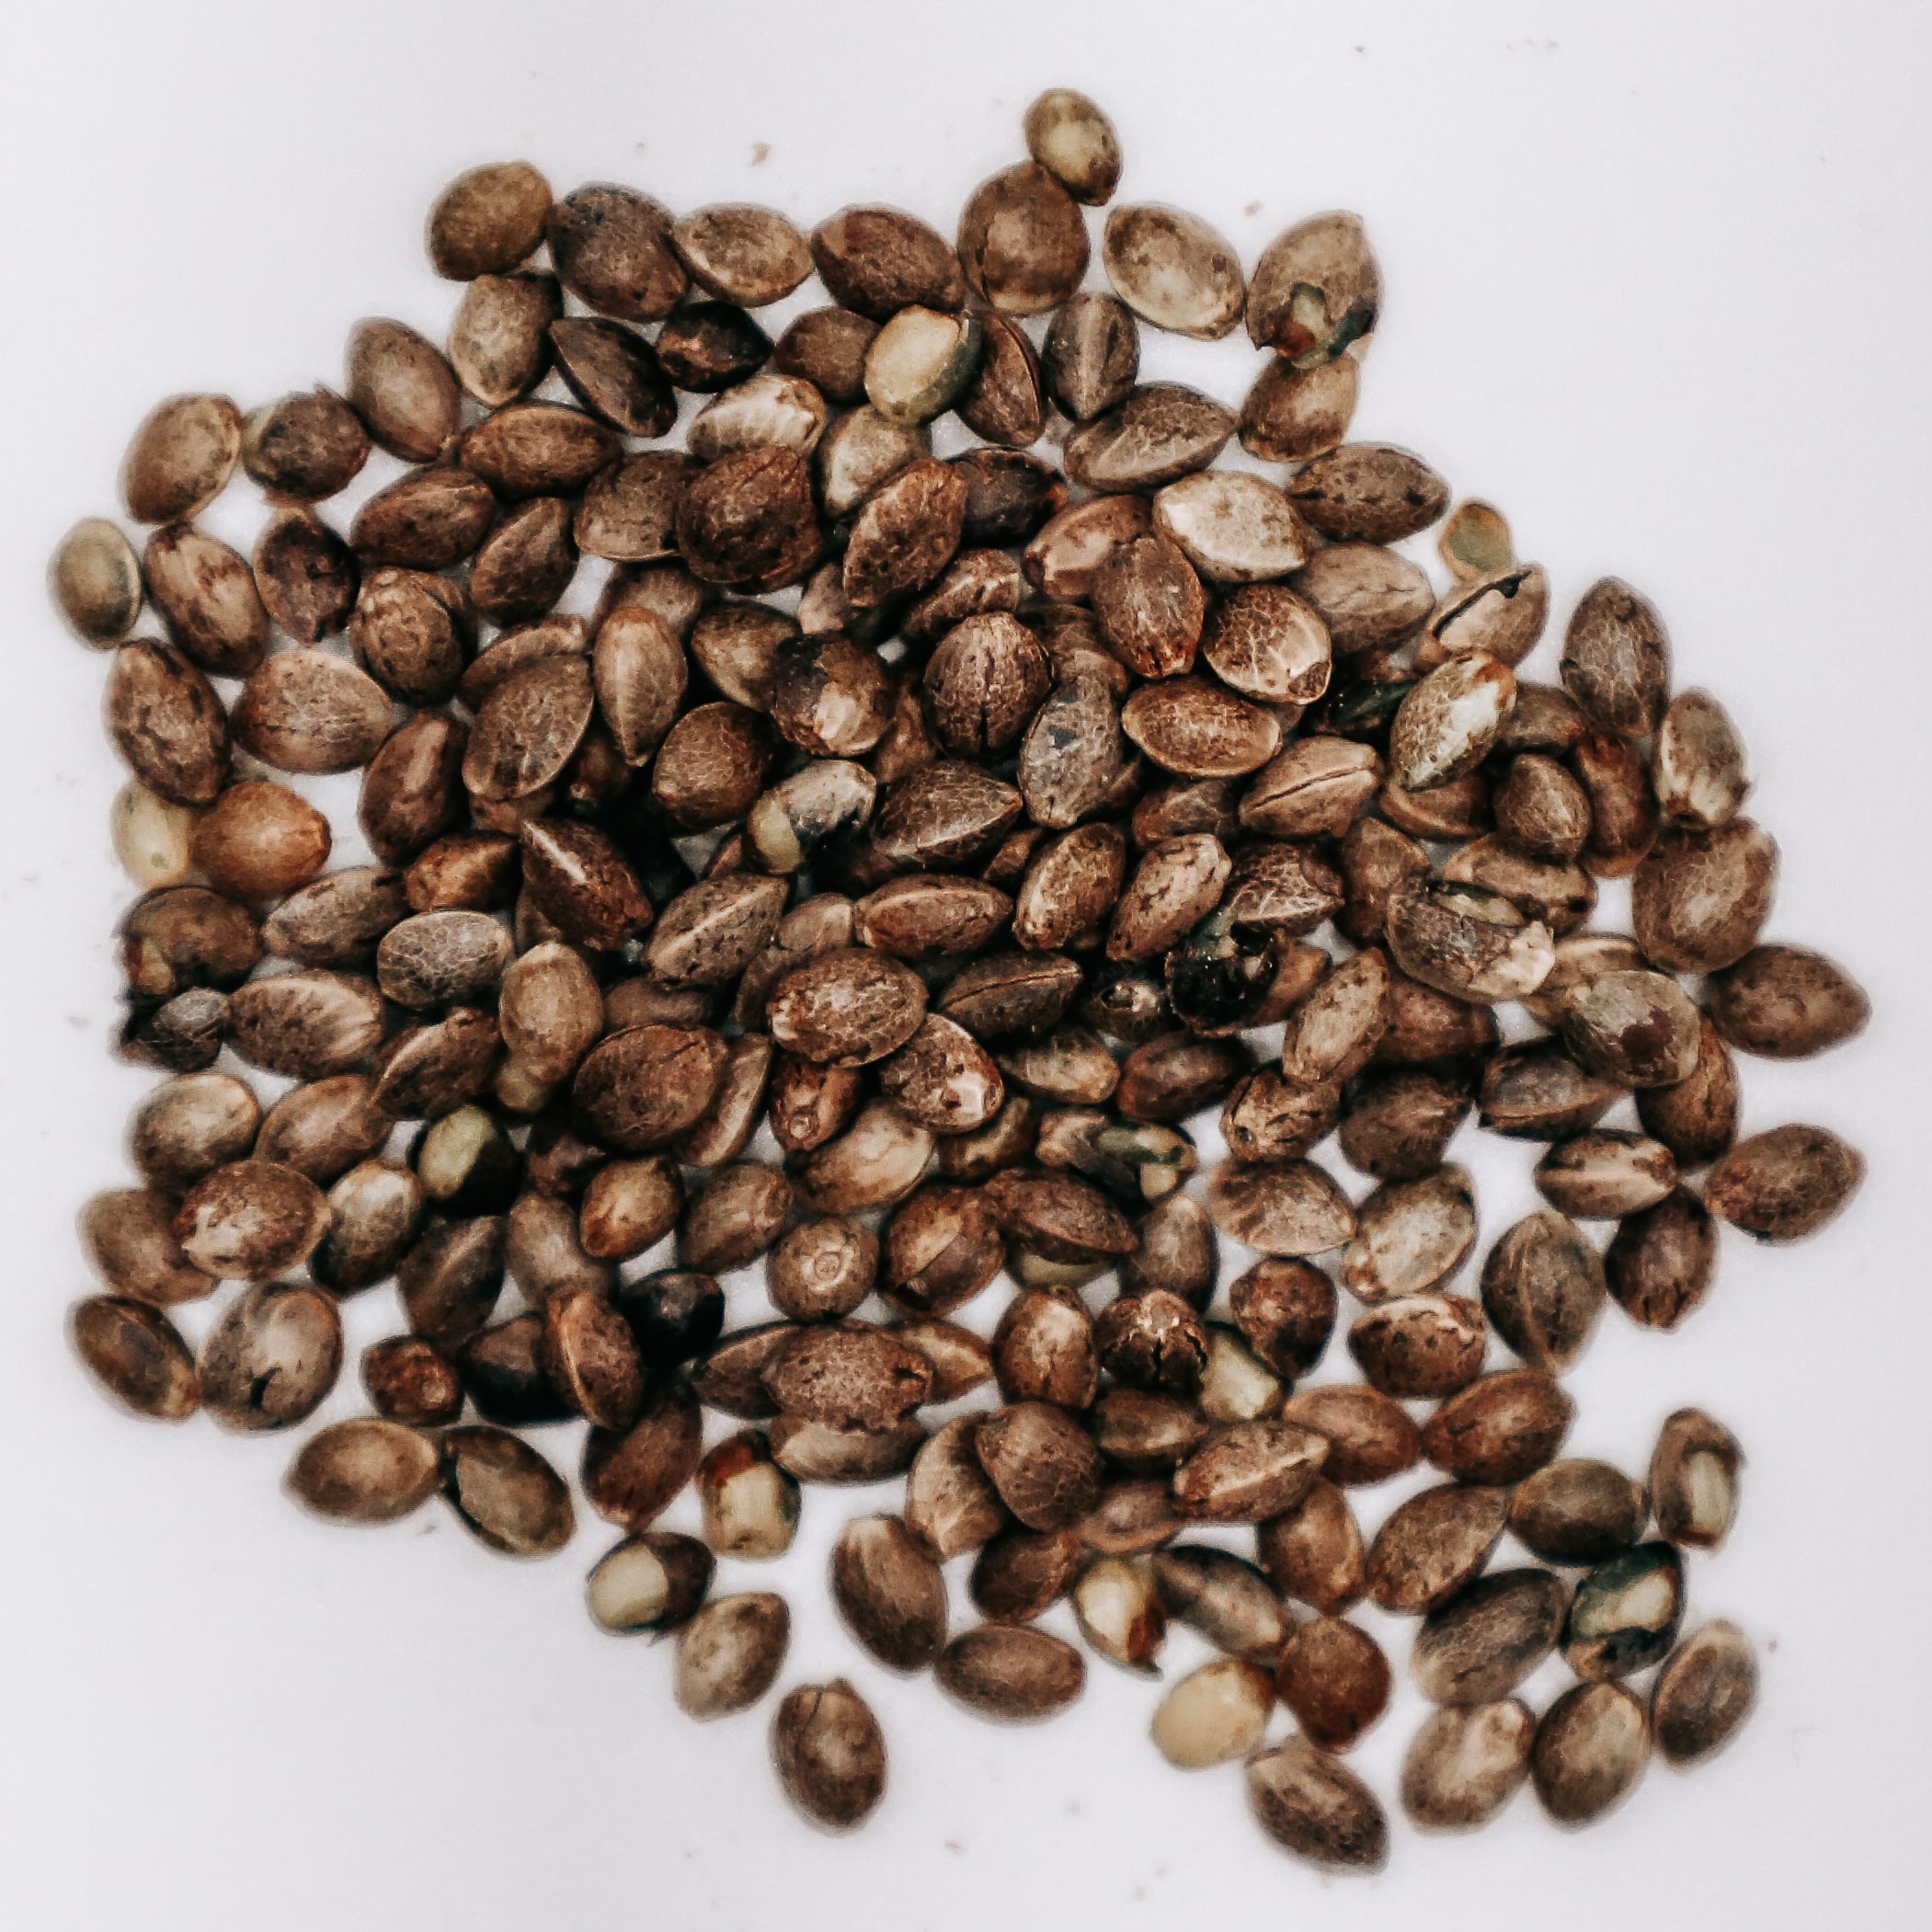 Featured image for “Magic Bullet CBD Feminized Hemp Seeds”